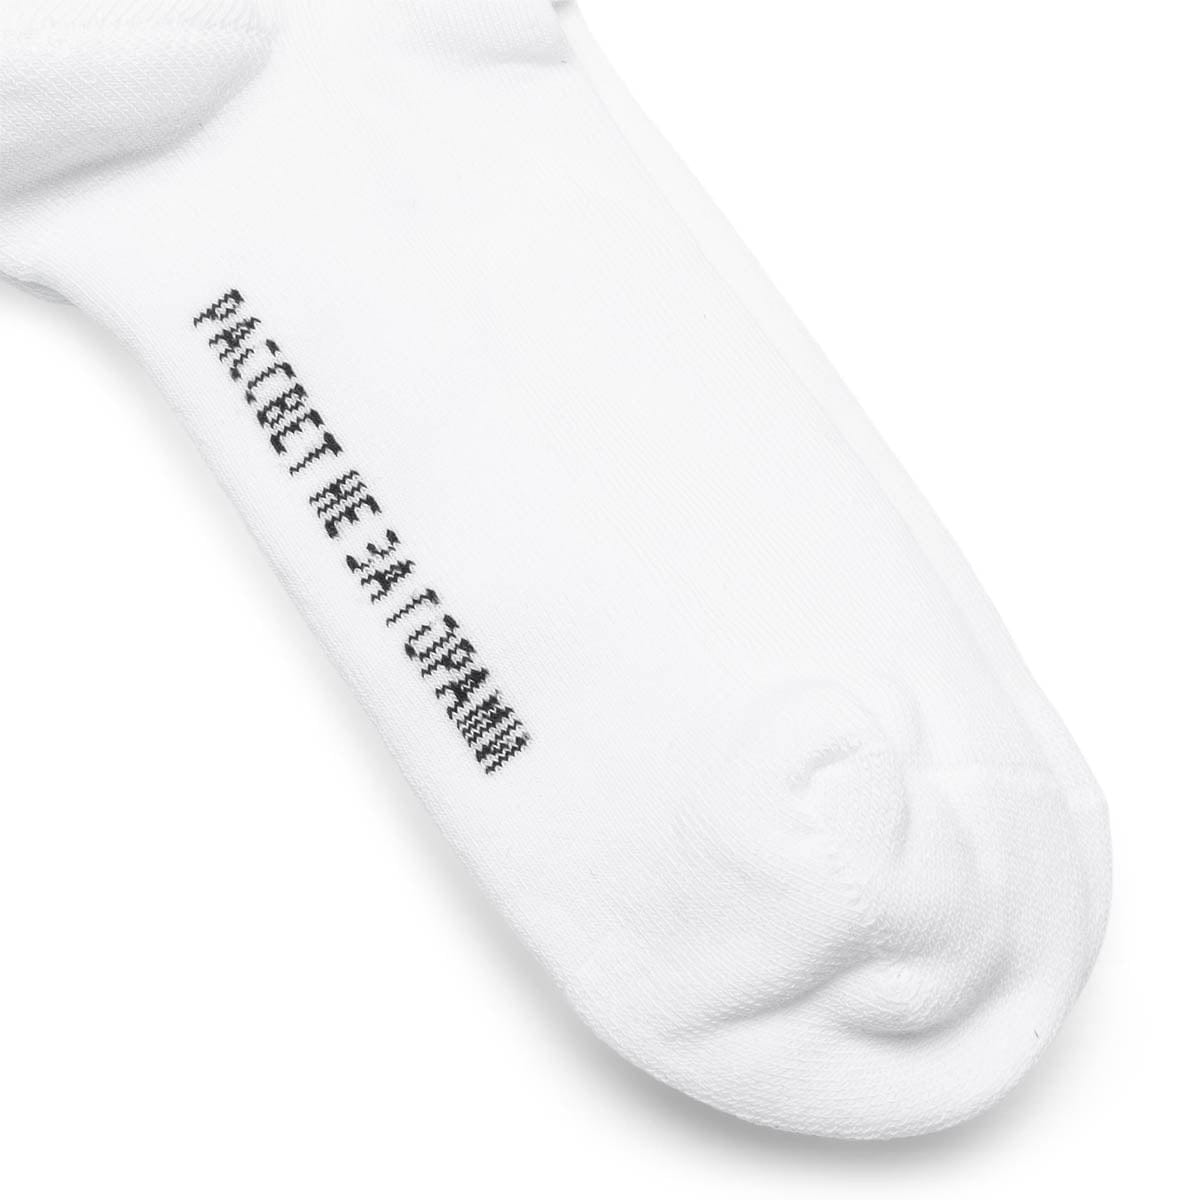 PACCBET Accessories - Soft Accessories - Socks WHITE / L LOGO 2 SOCKS KNIT